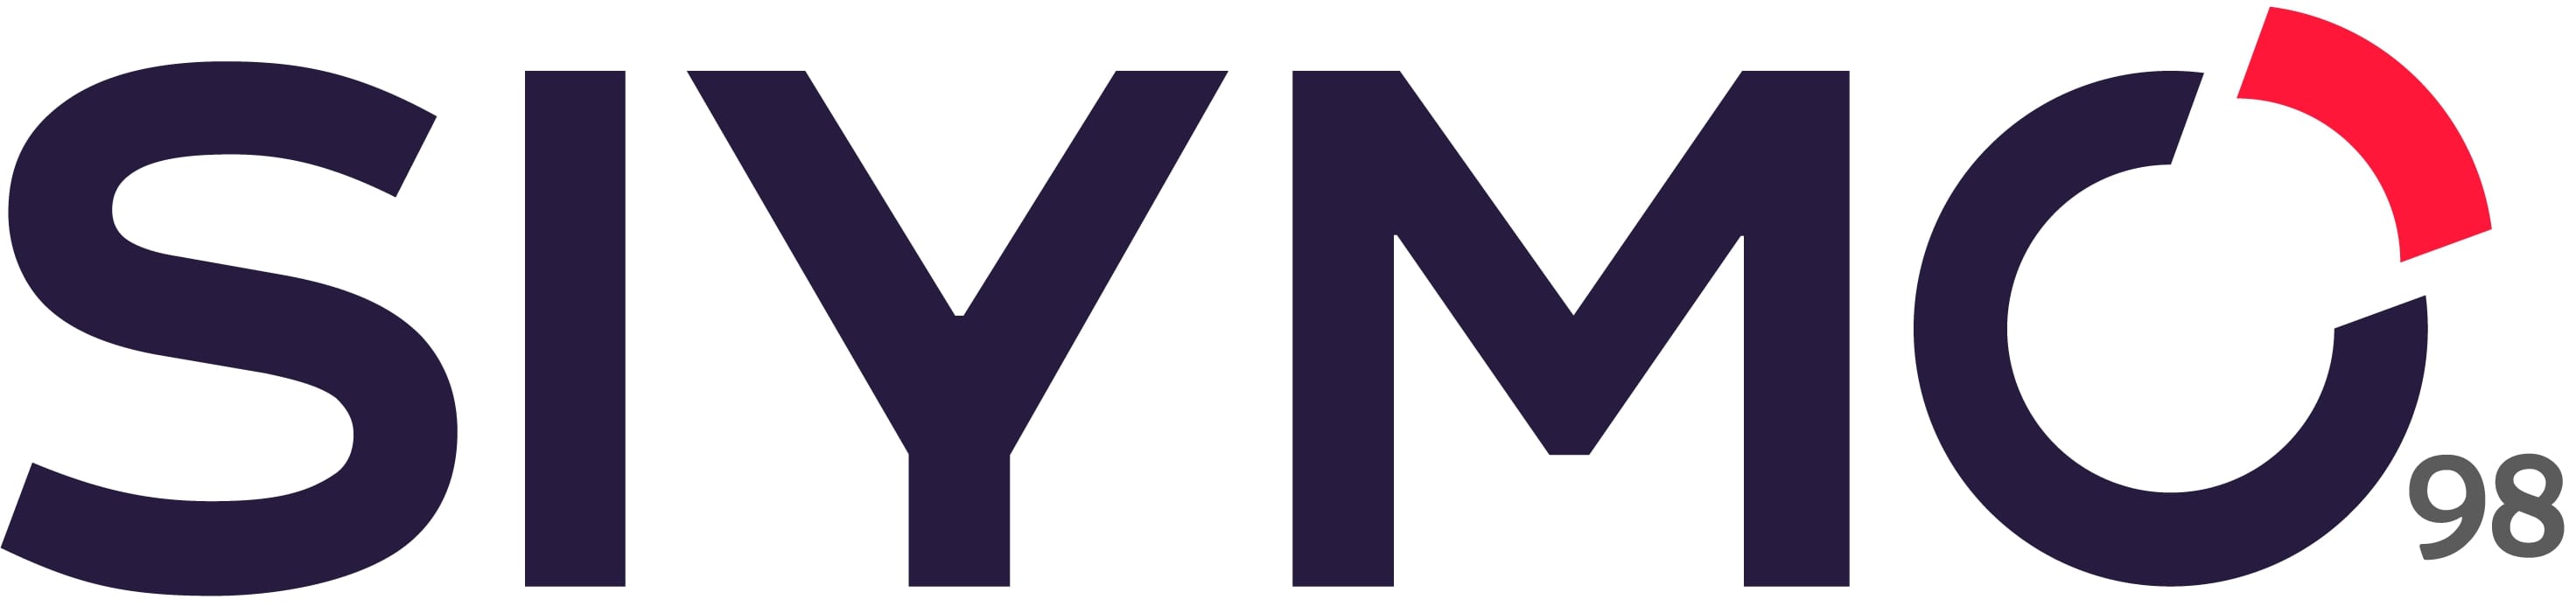 Ooo uz. Siymo рекламное агентство. Siymo logo. Оптика Ташкент logo. Маркетинговая Ассоциация Узбекистана.